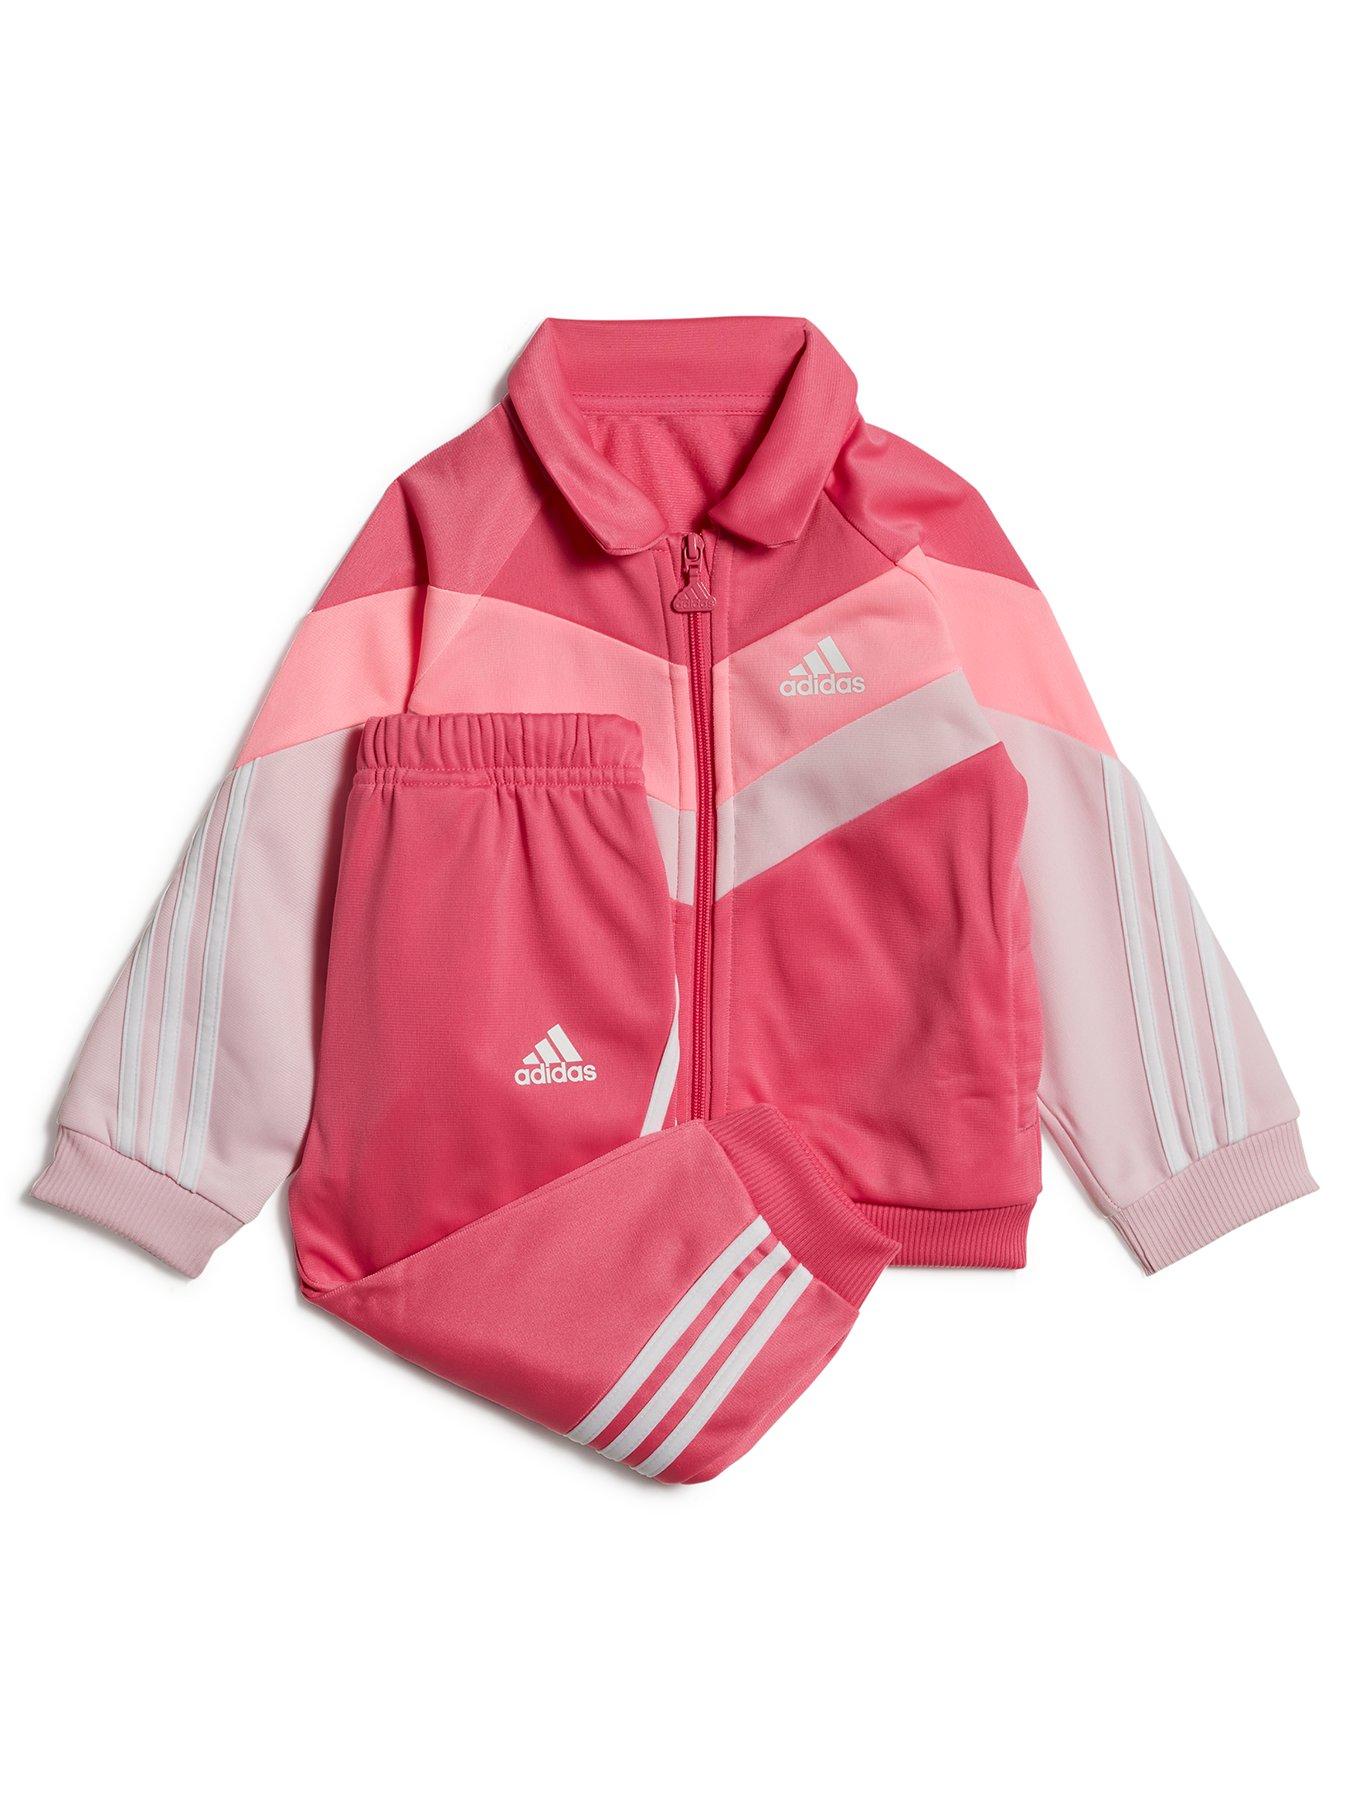 Resbaladizo Antídoto abrazo Pink | Adidas | Tracksuits | Sportswear | Child & baby | www.very.co.uk